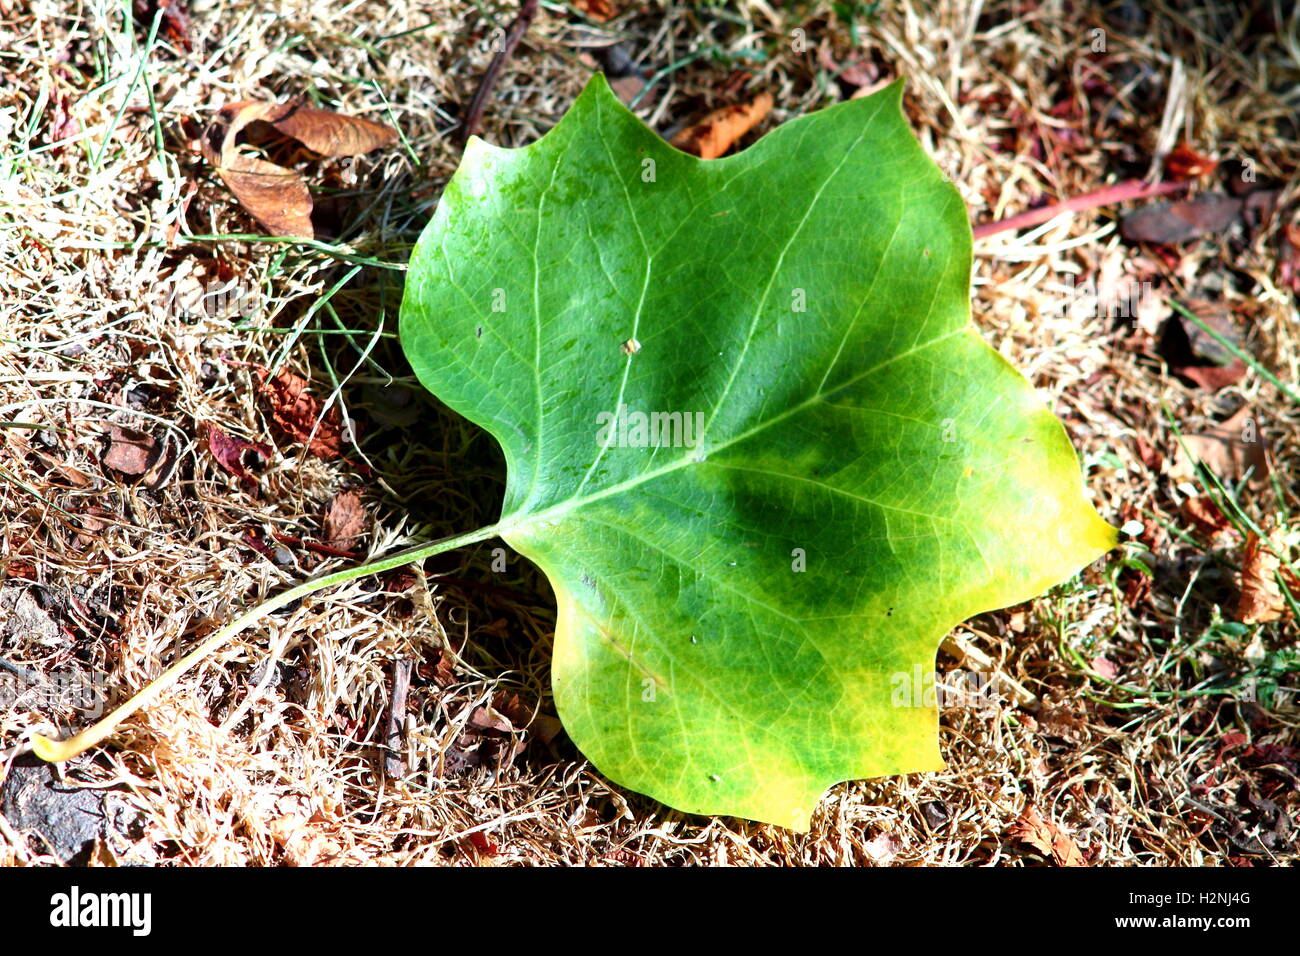 Tulip tree leaf with yellow edge on dry grass bottom. Stock Photo